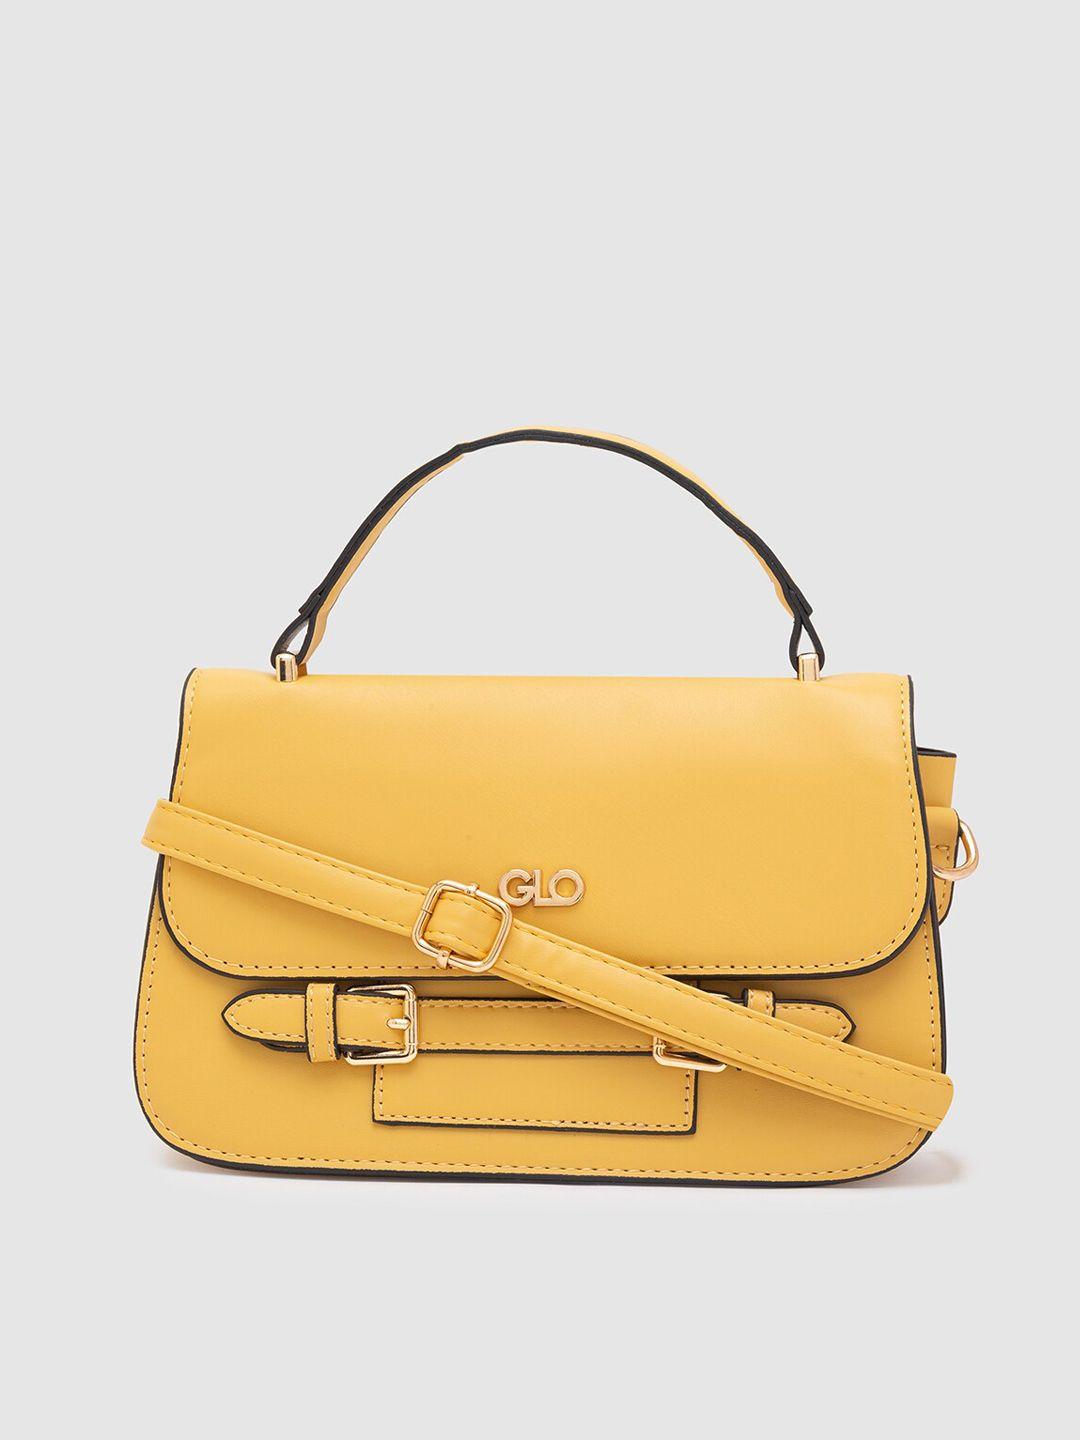 globus mustard structured satchel bag